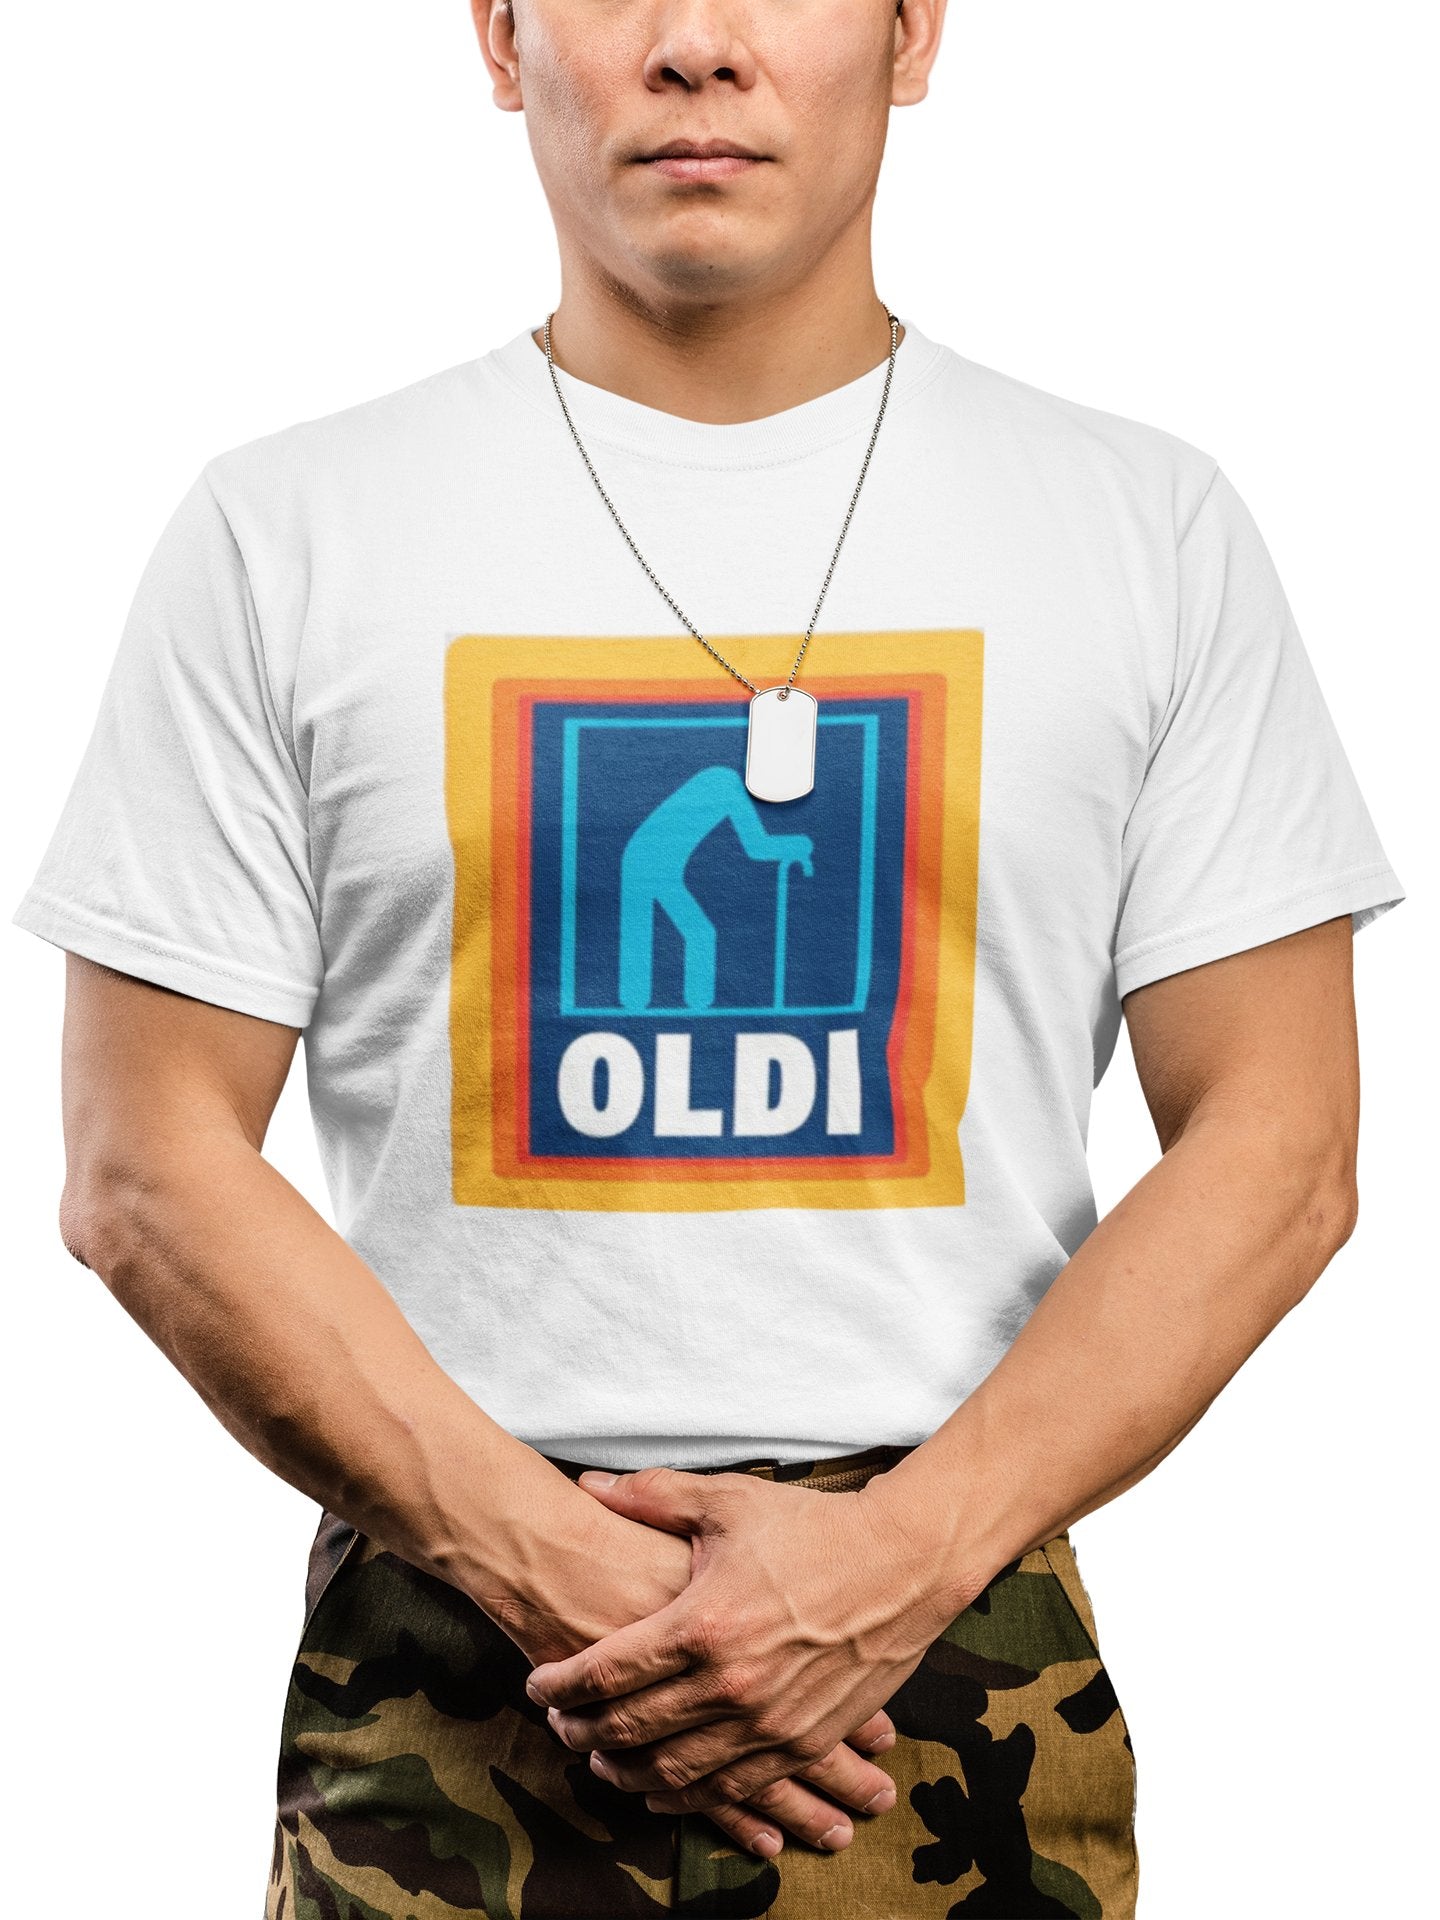 "OLDI" Tee - Wow T-Shirts